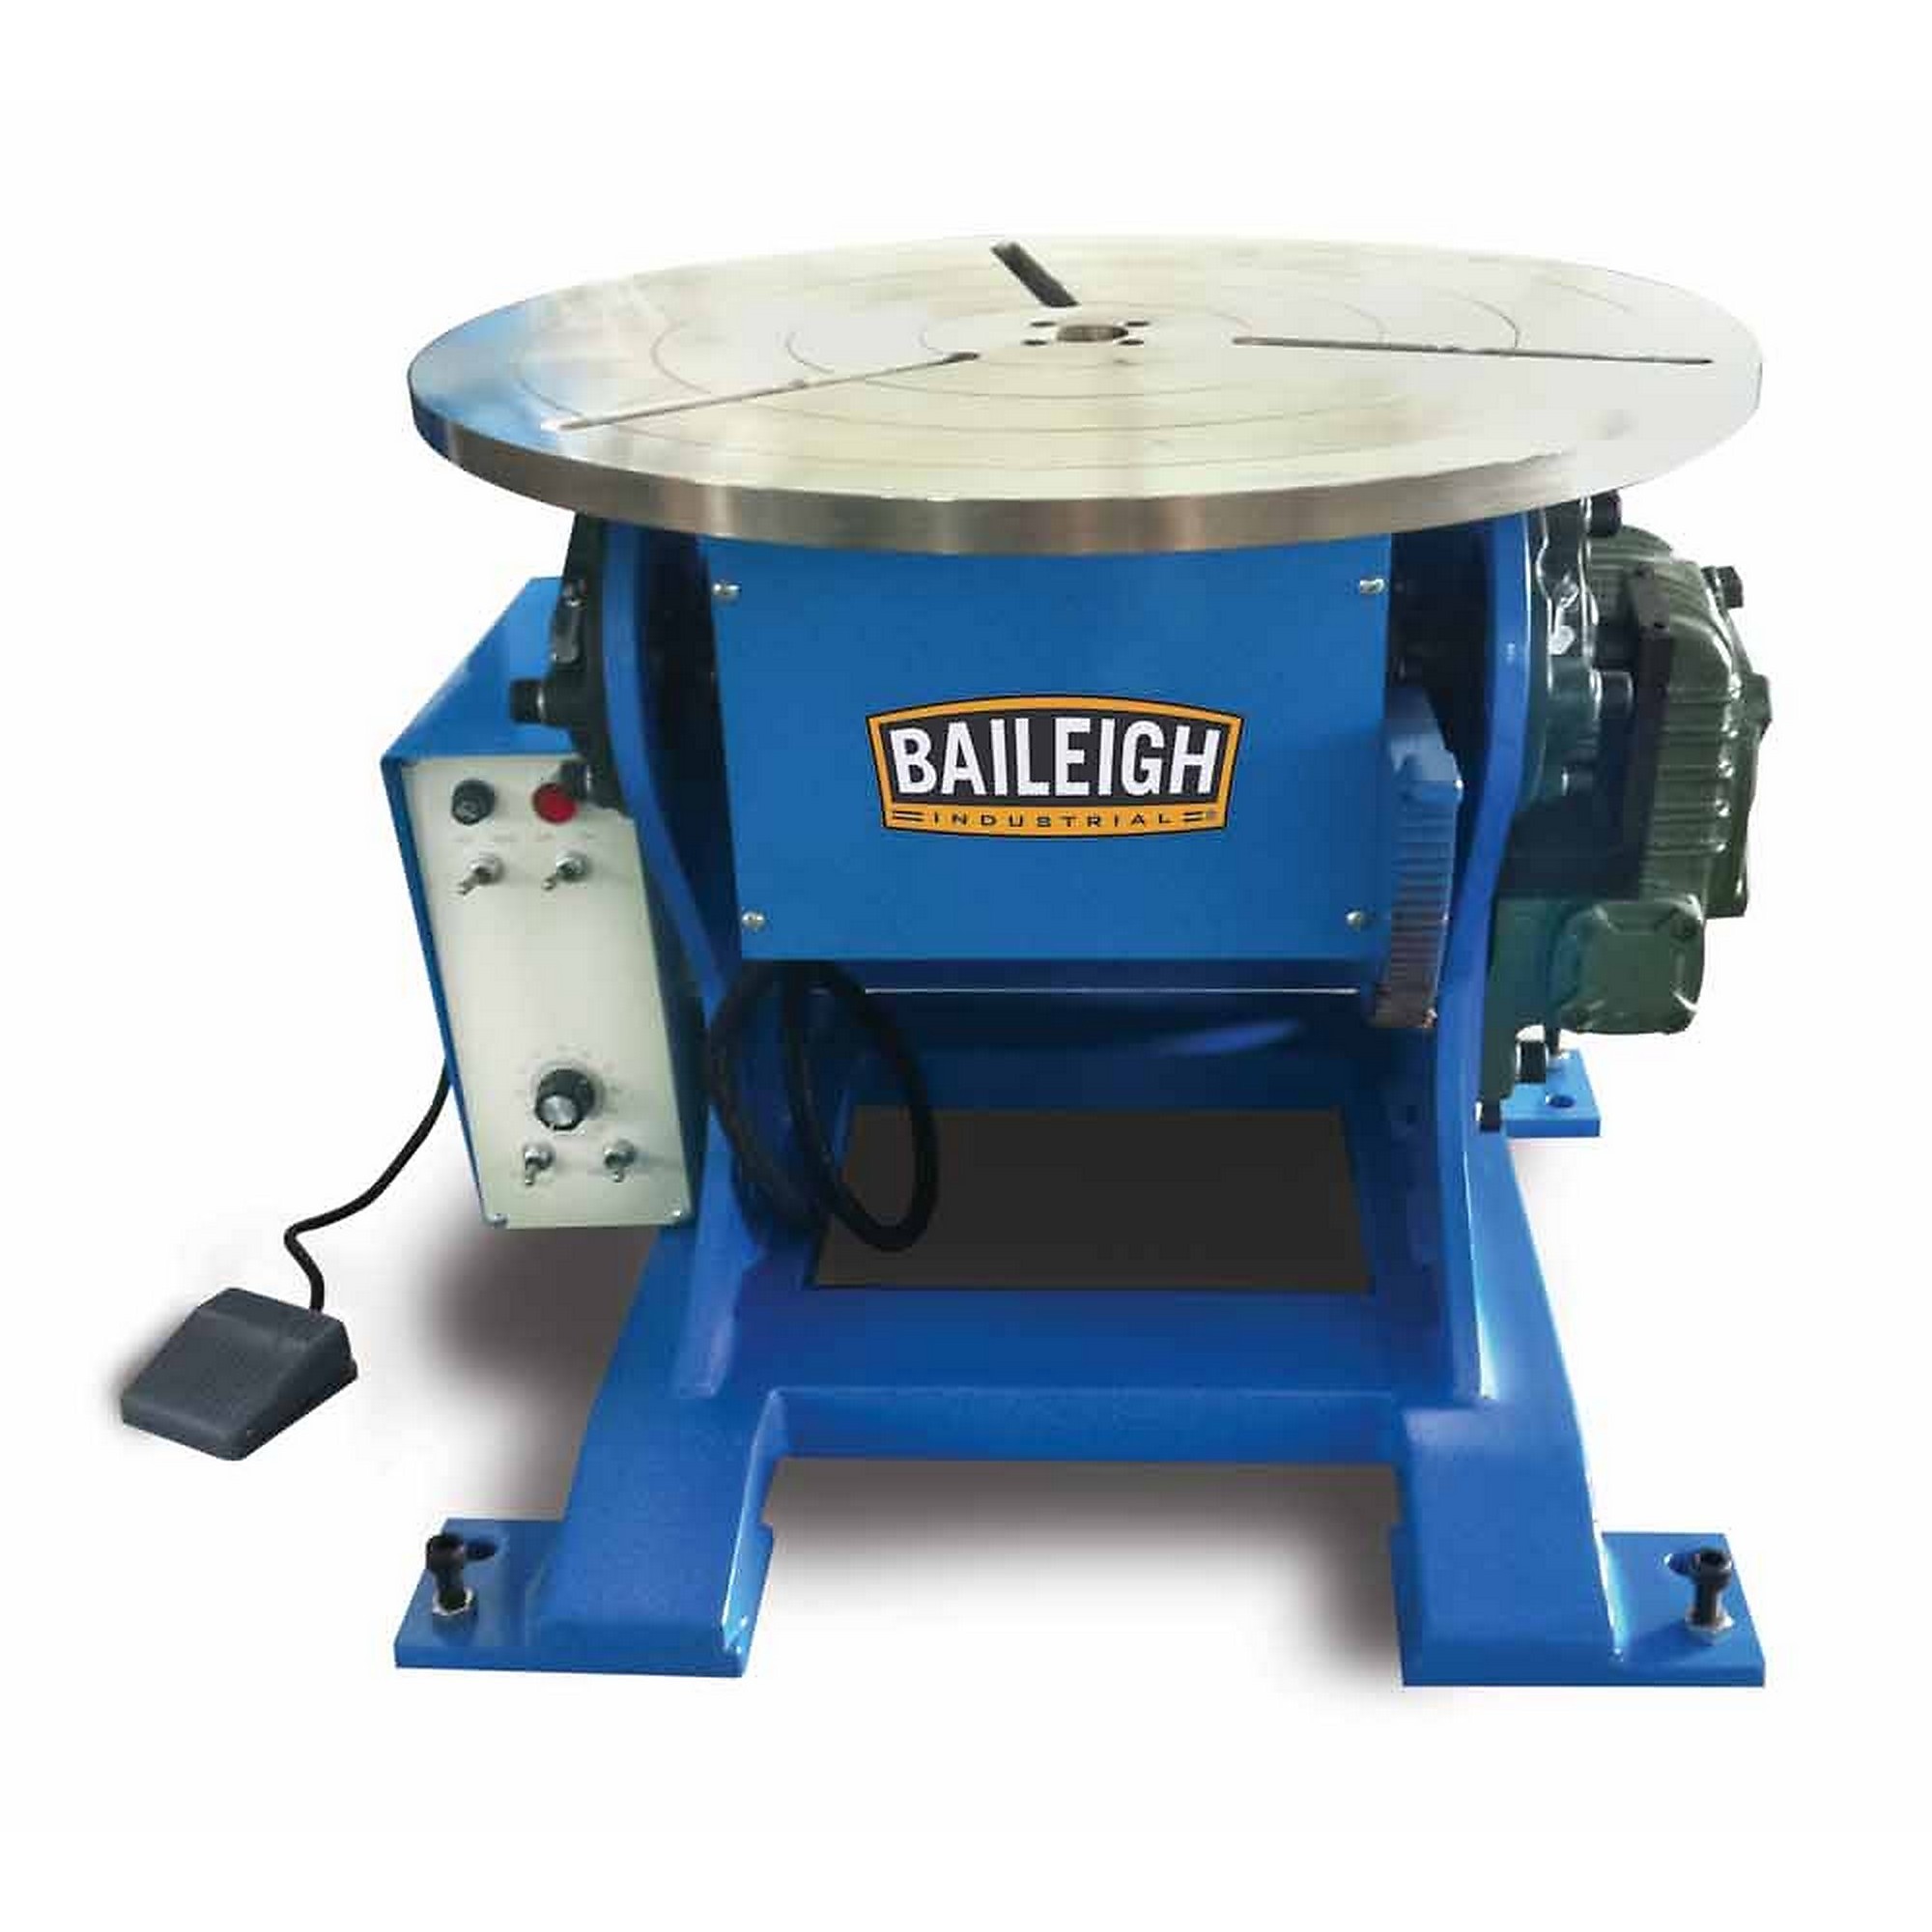 Baileigh, Welding Positioner, Model WP-1100